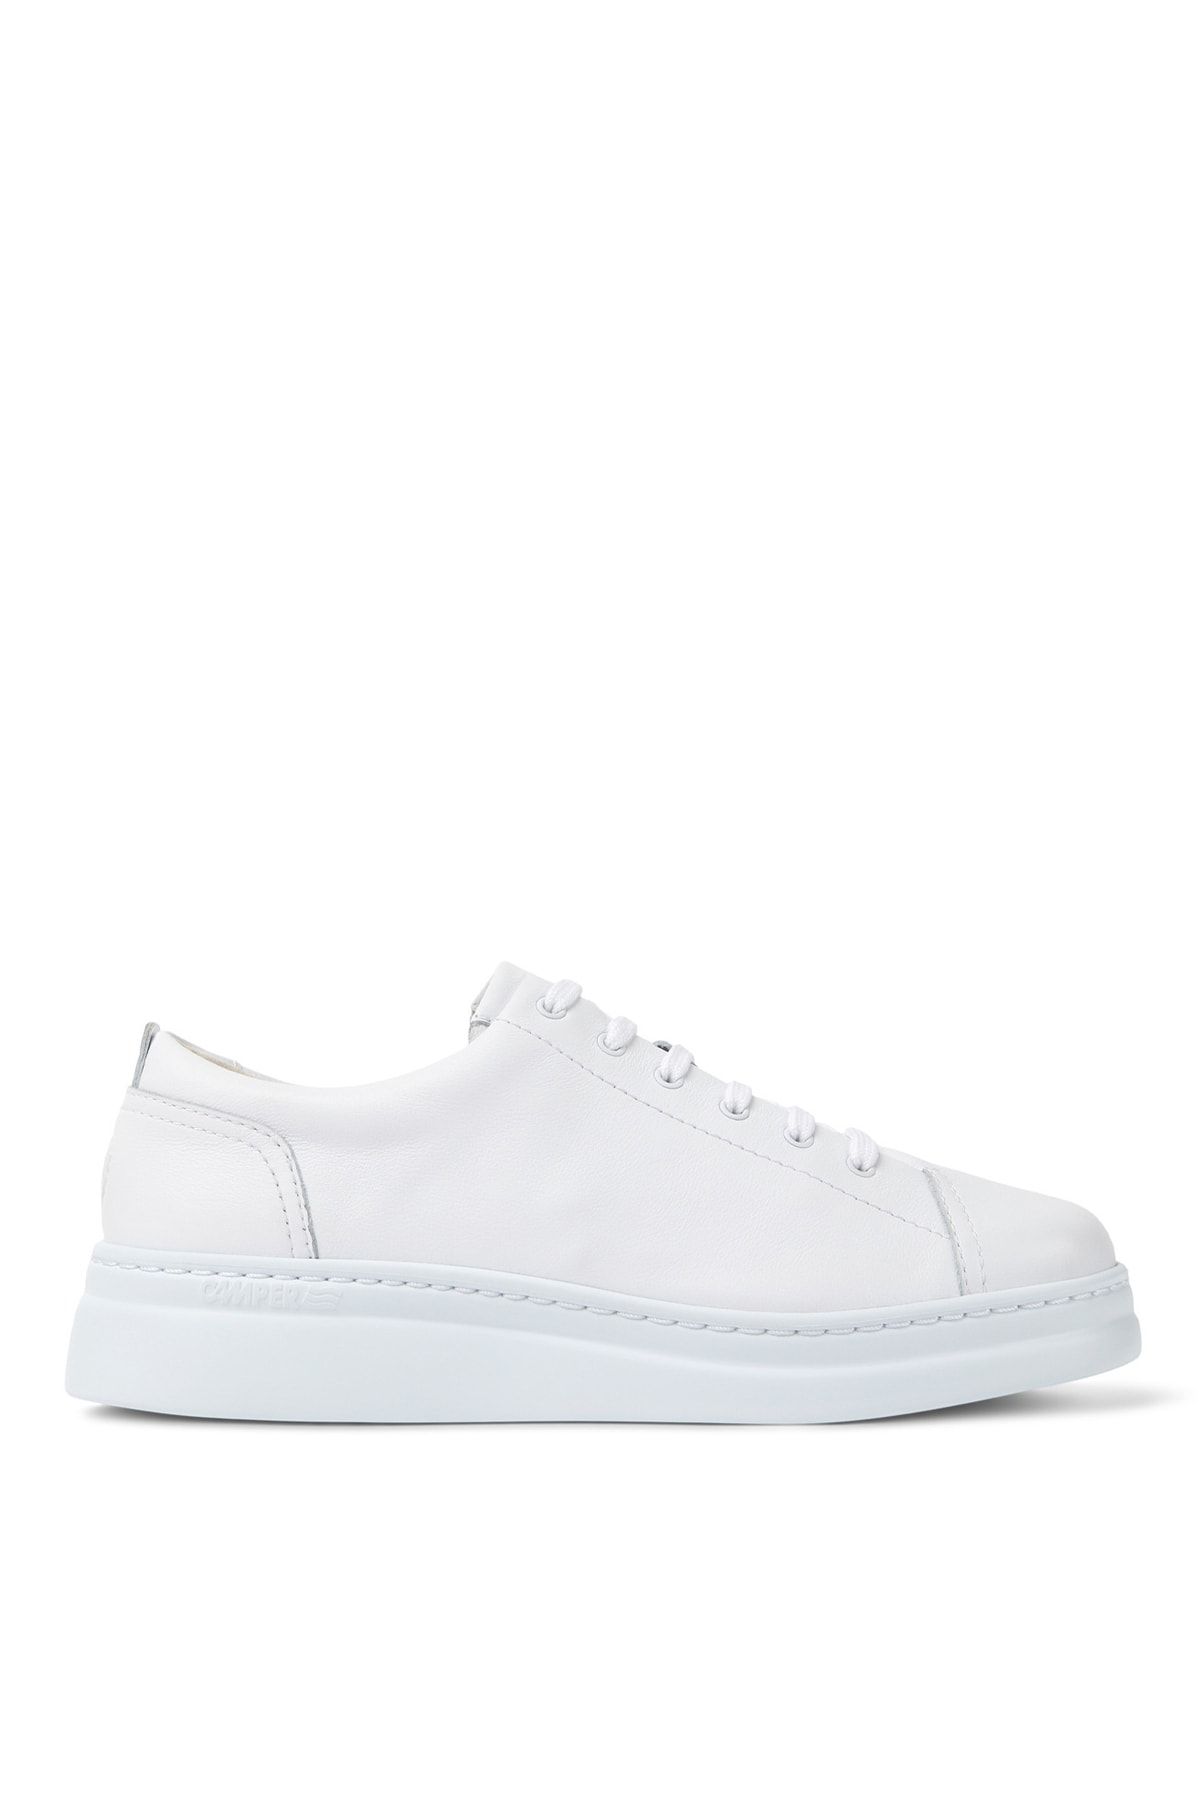 CAMPER Beyaz Kadın Sneaker K200508-041